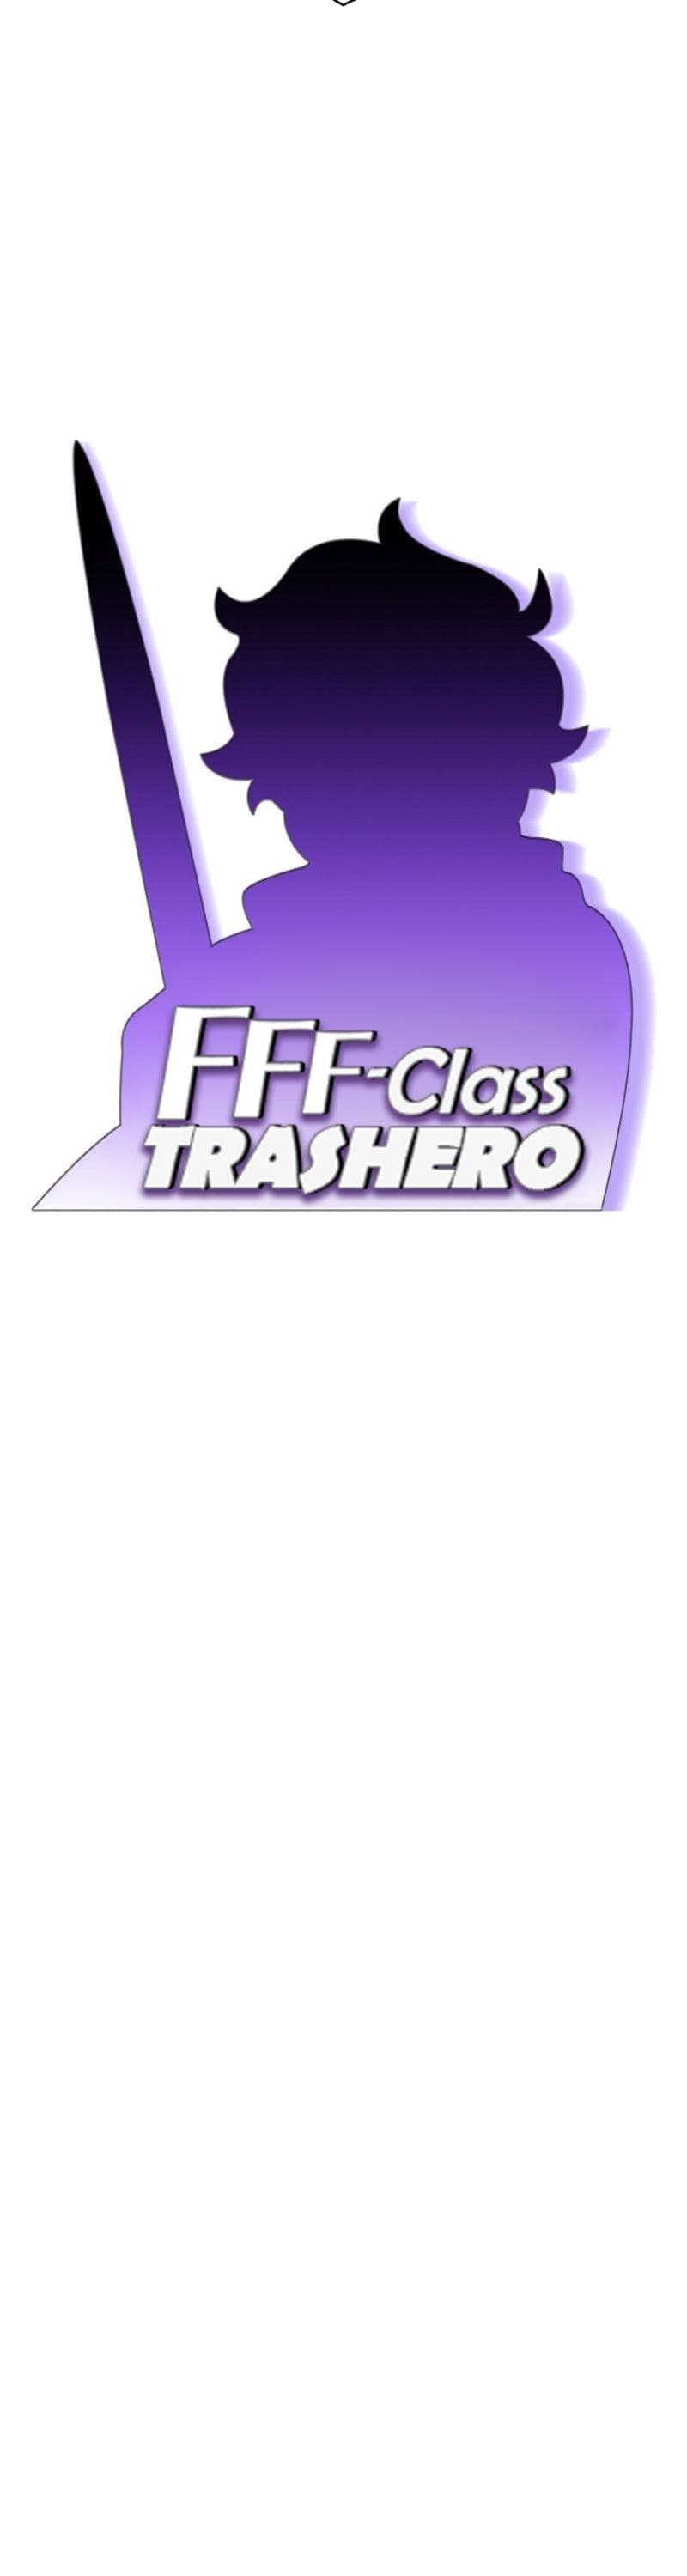 FFF Class Trashero31 (9)